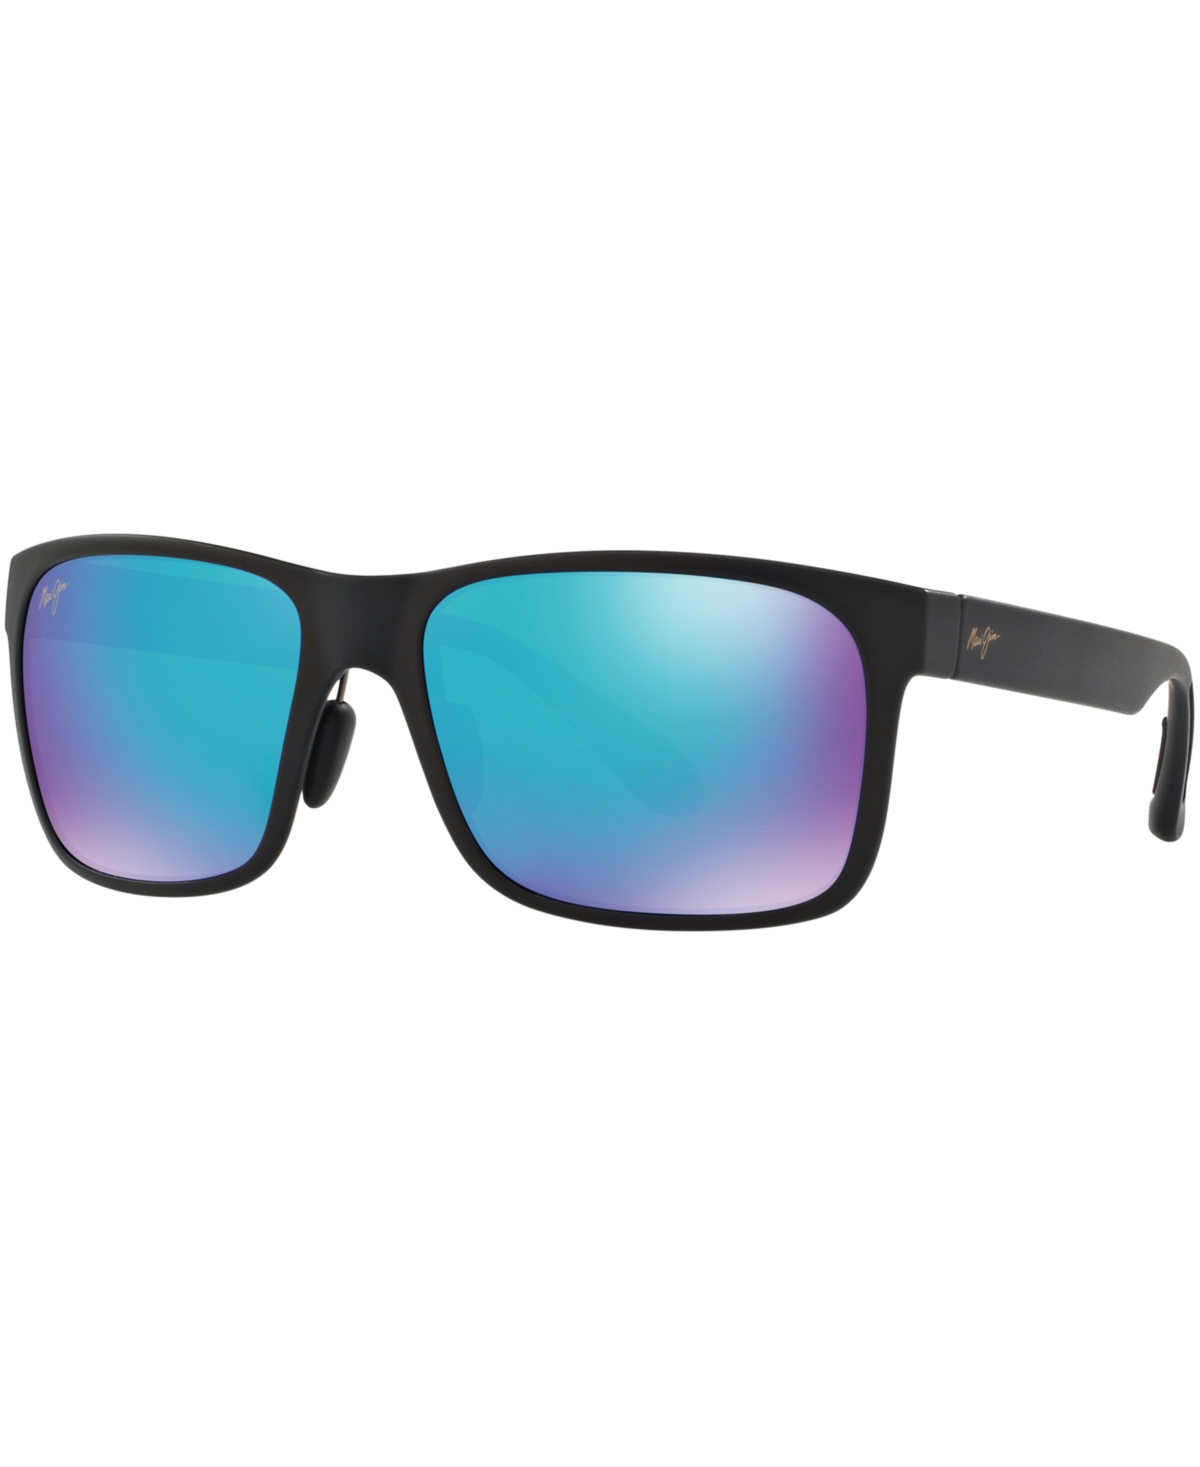 Red Sands Polarized Sunglasses , 432 Blue Hawaii Collection - BLACK MATTE/BLUE MIRROR POLAR